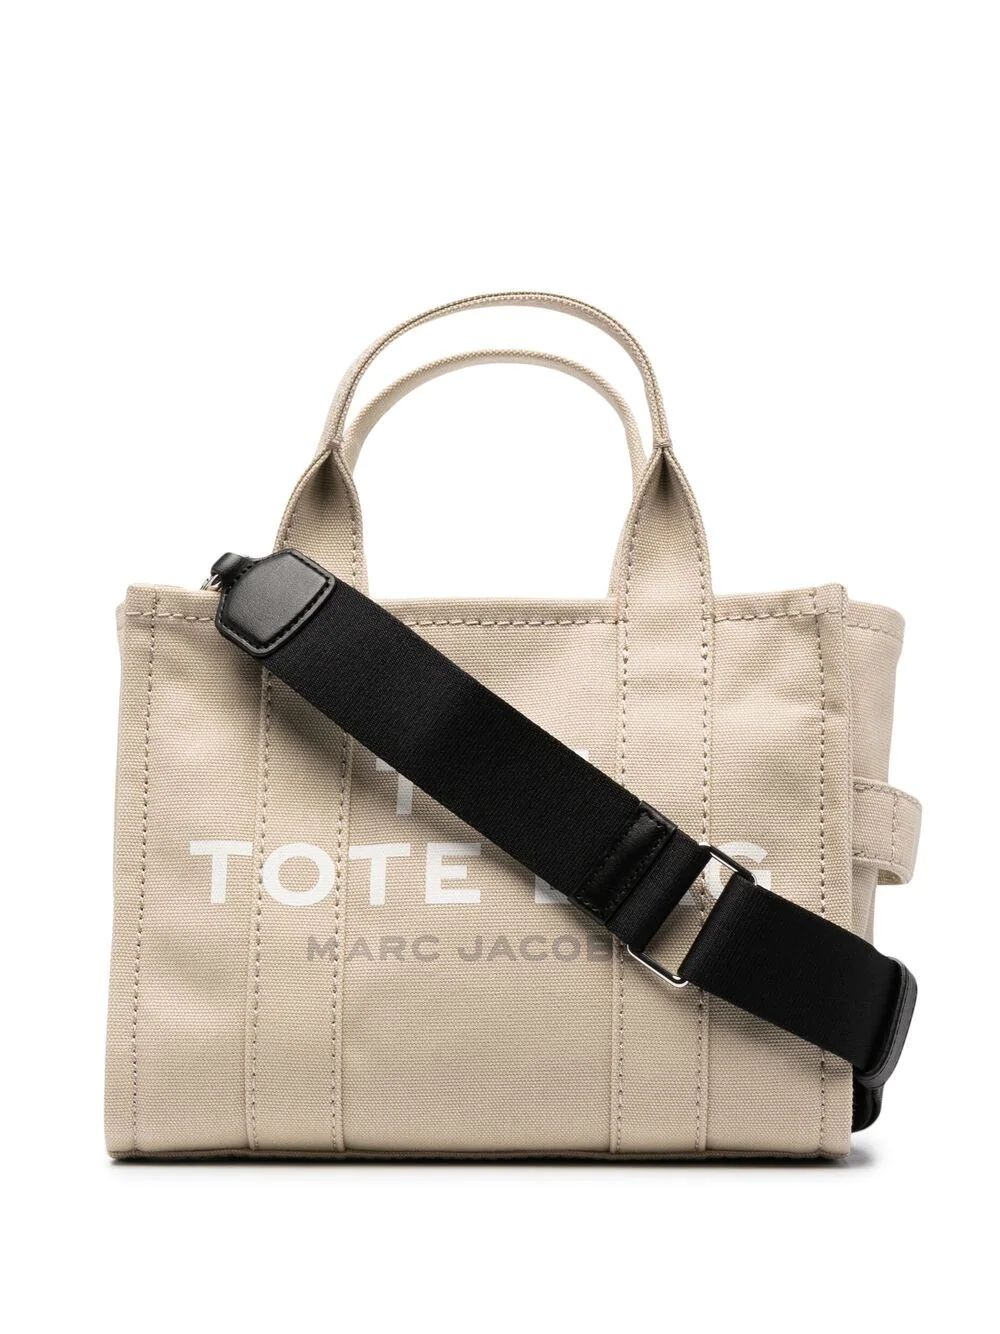 Marc Jacobs The Tote Mini Bag - Farfetch | Farfetch Global